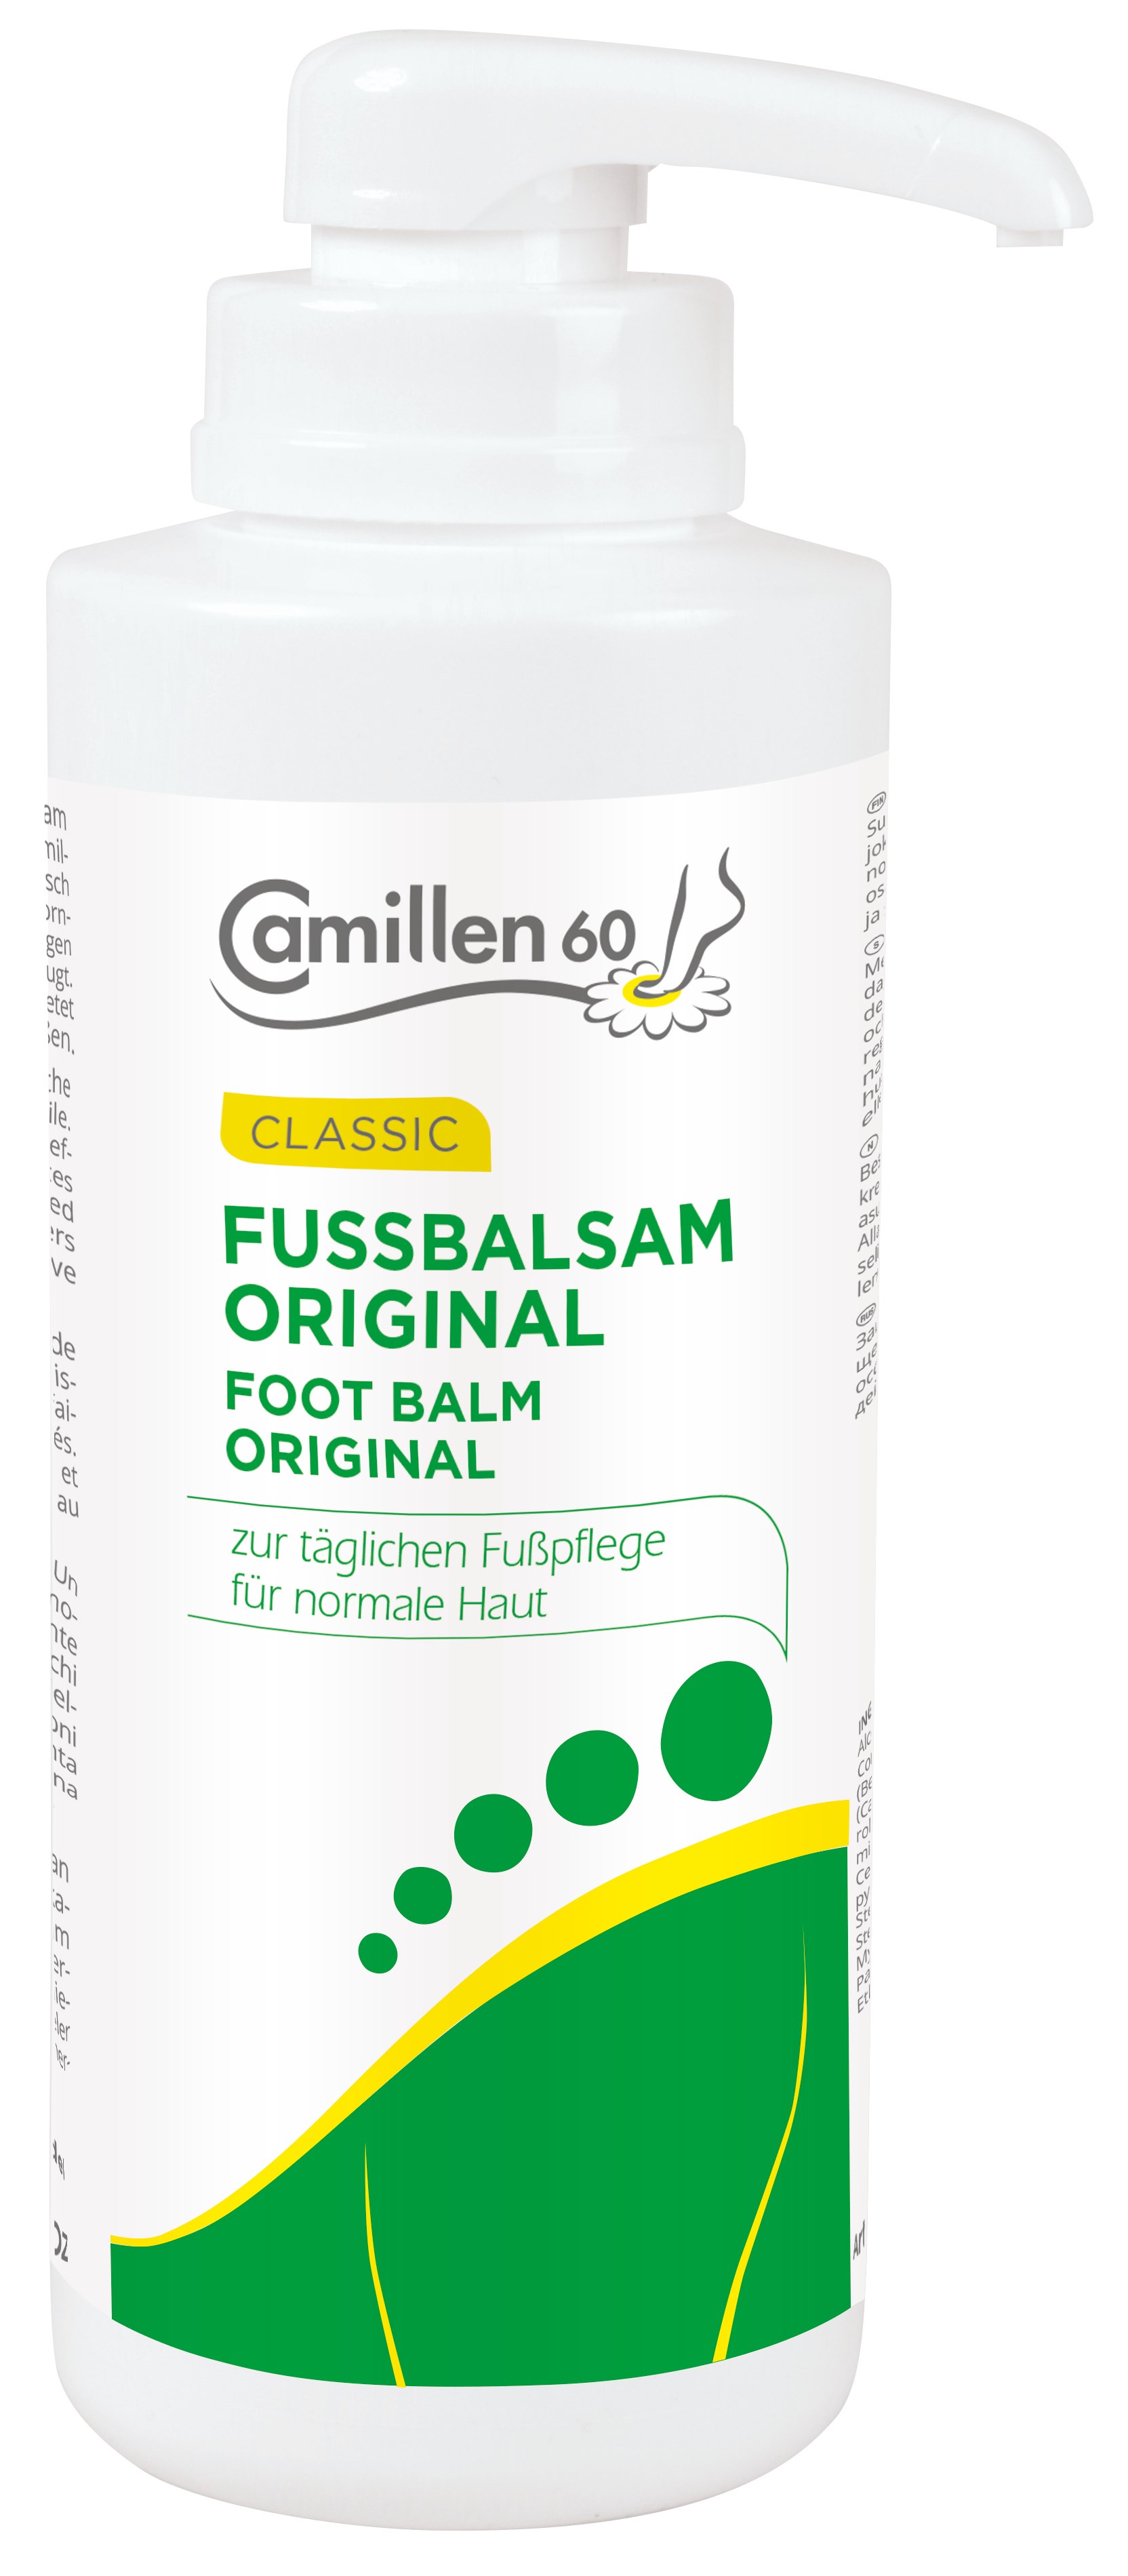 Camillen Classic, Fodbalsam, Original